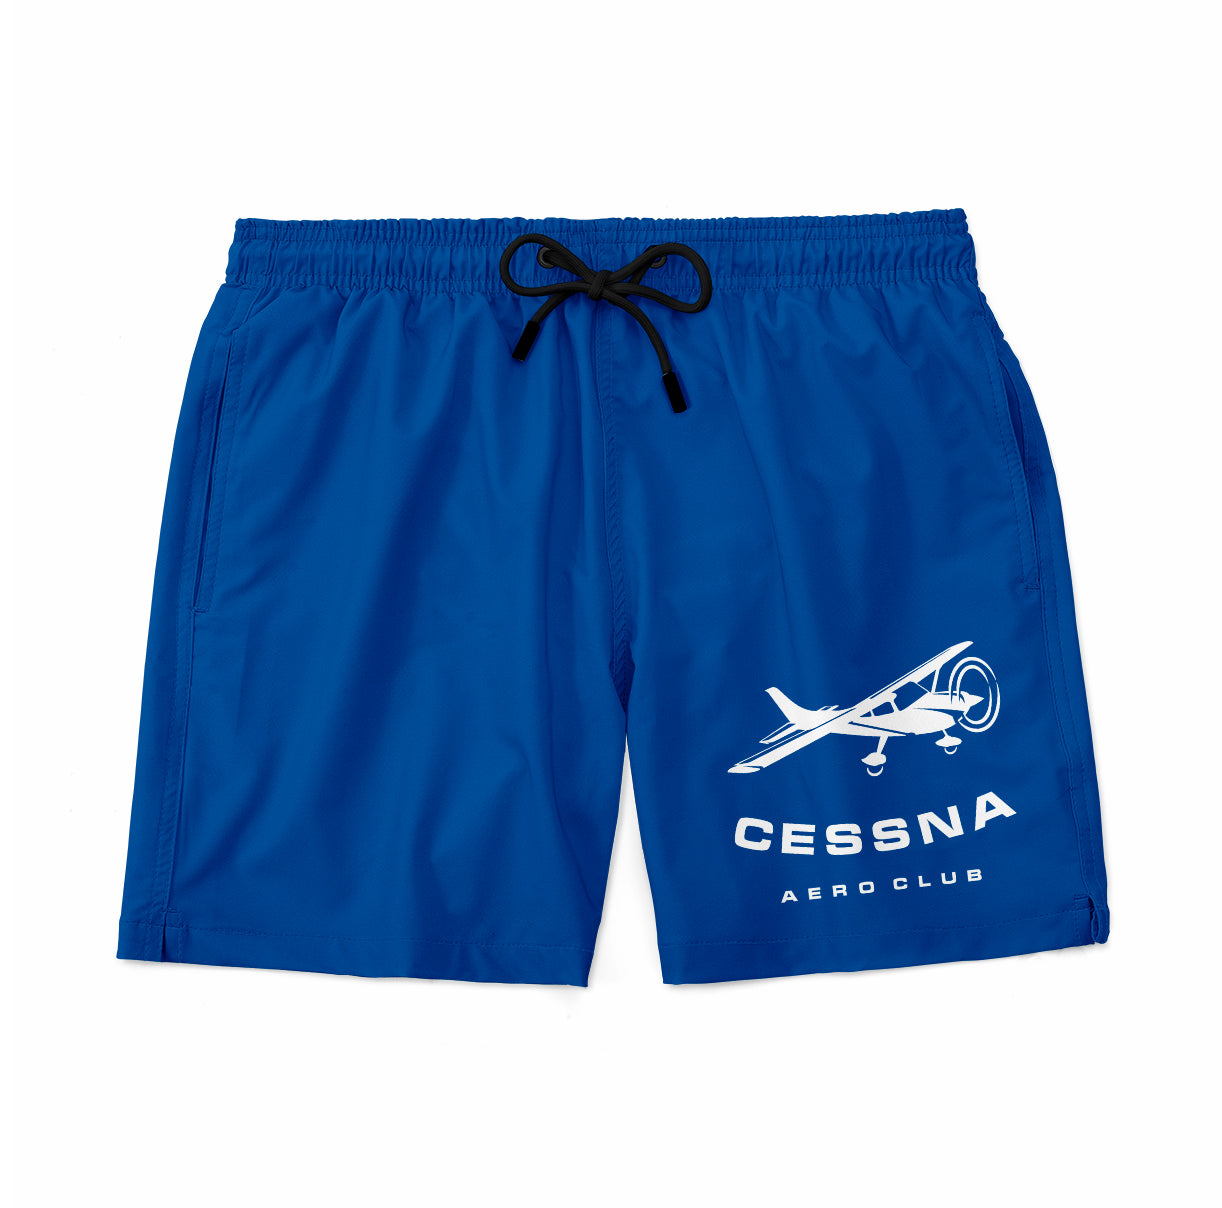 Cessna Aeroclub Designed Swim Trunks & Shorts